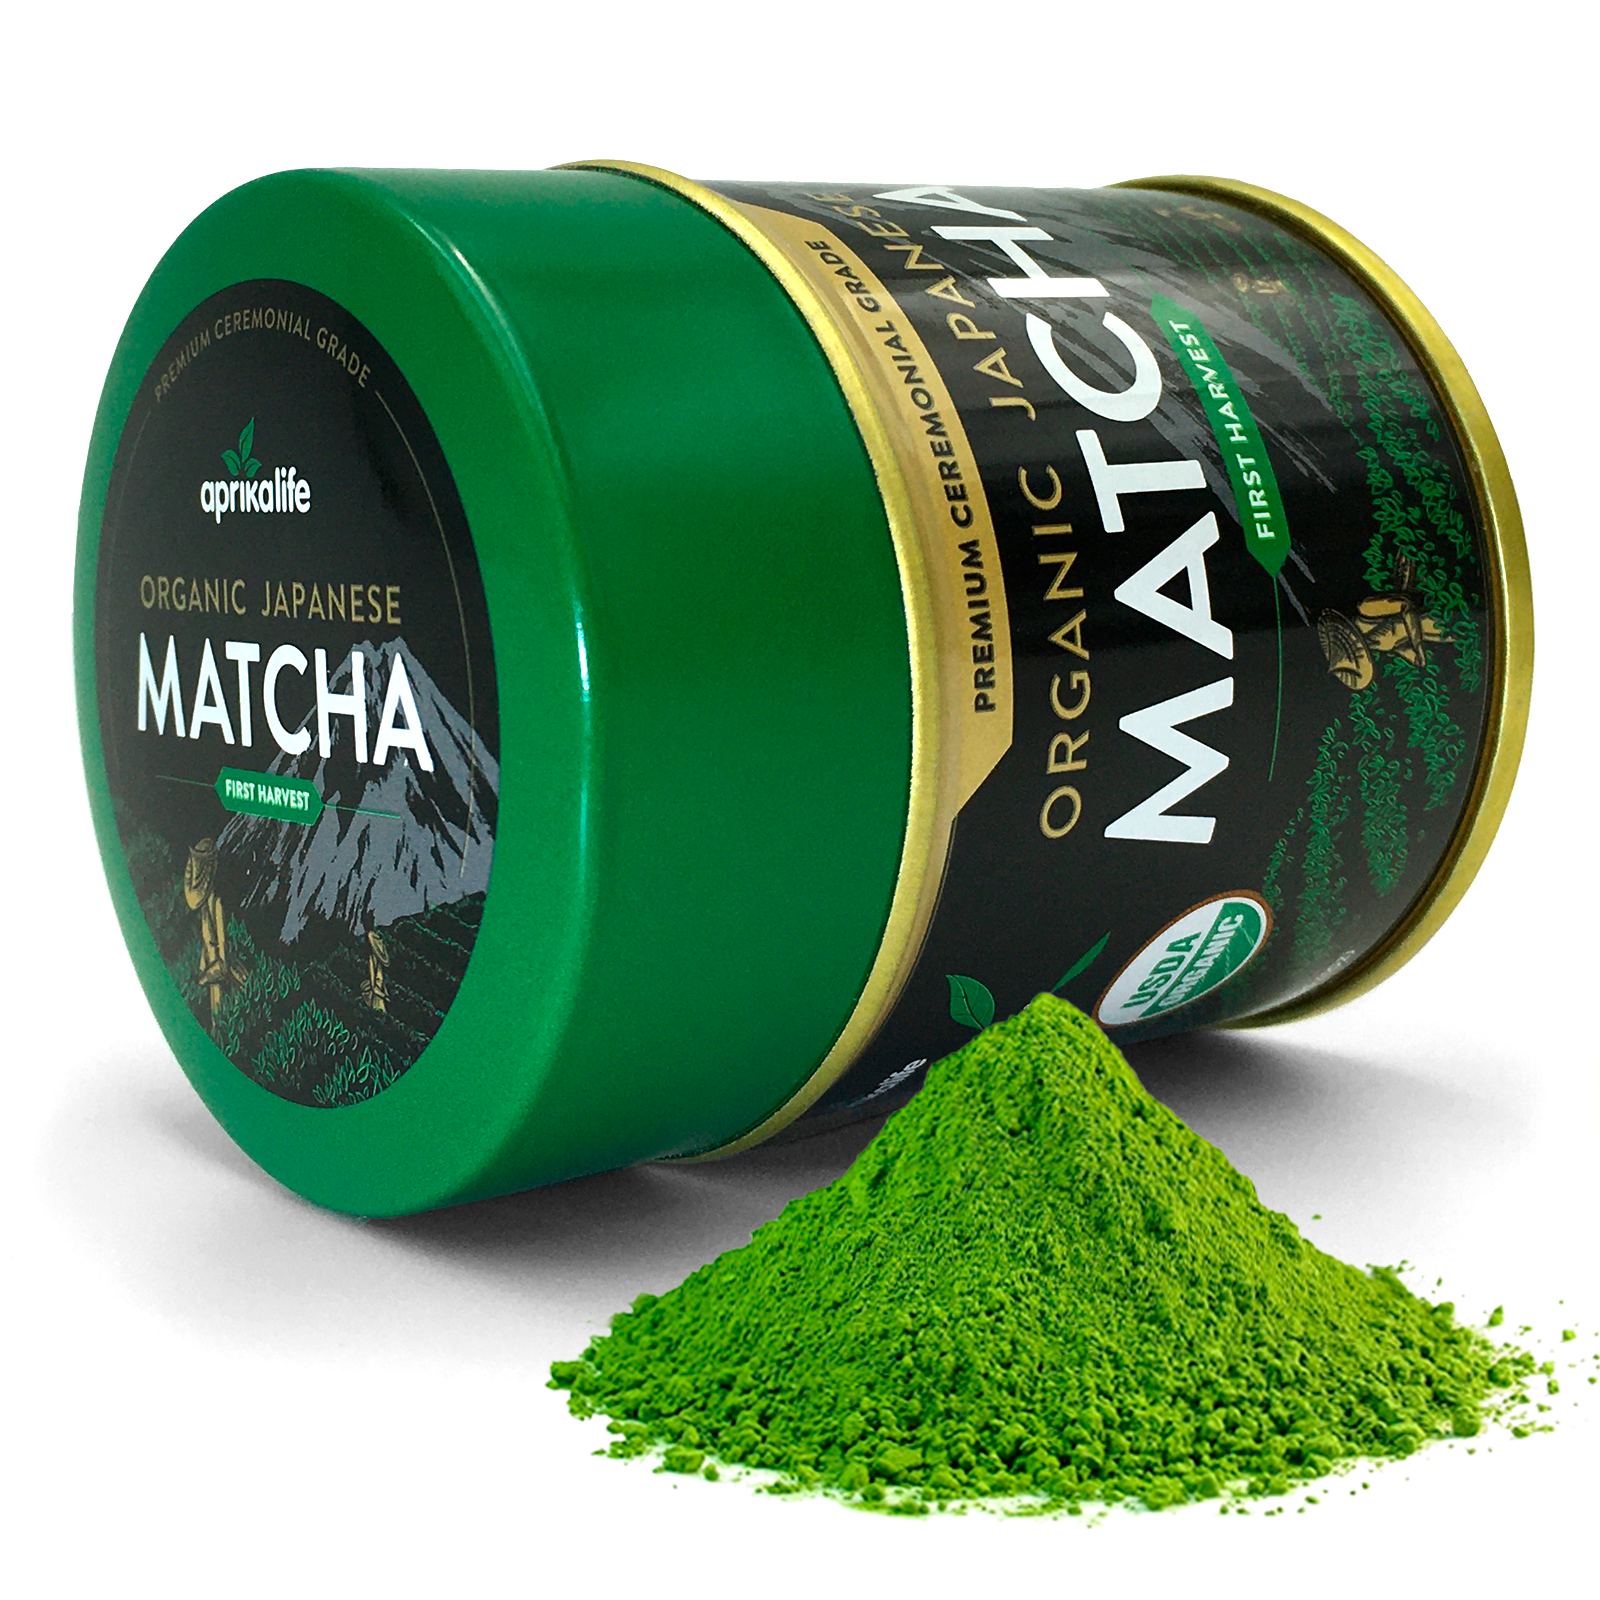 Organic Ceremonial Grade Matcha, Premium Matcha Tea